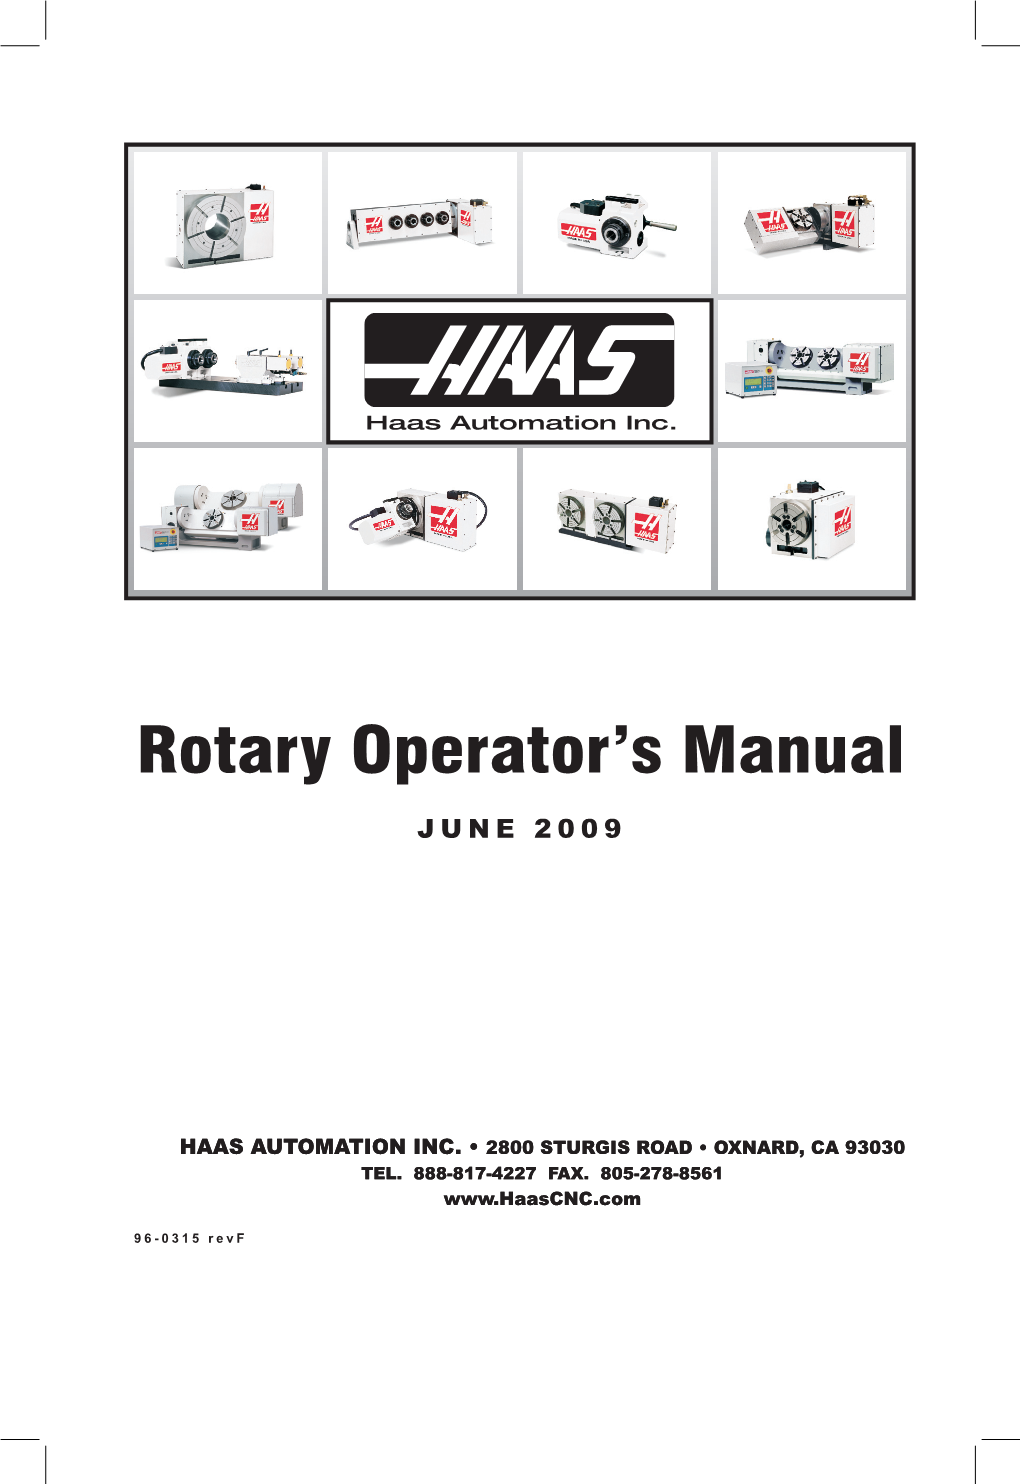 Rotary Operator's Manual